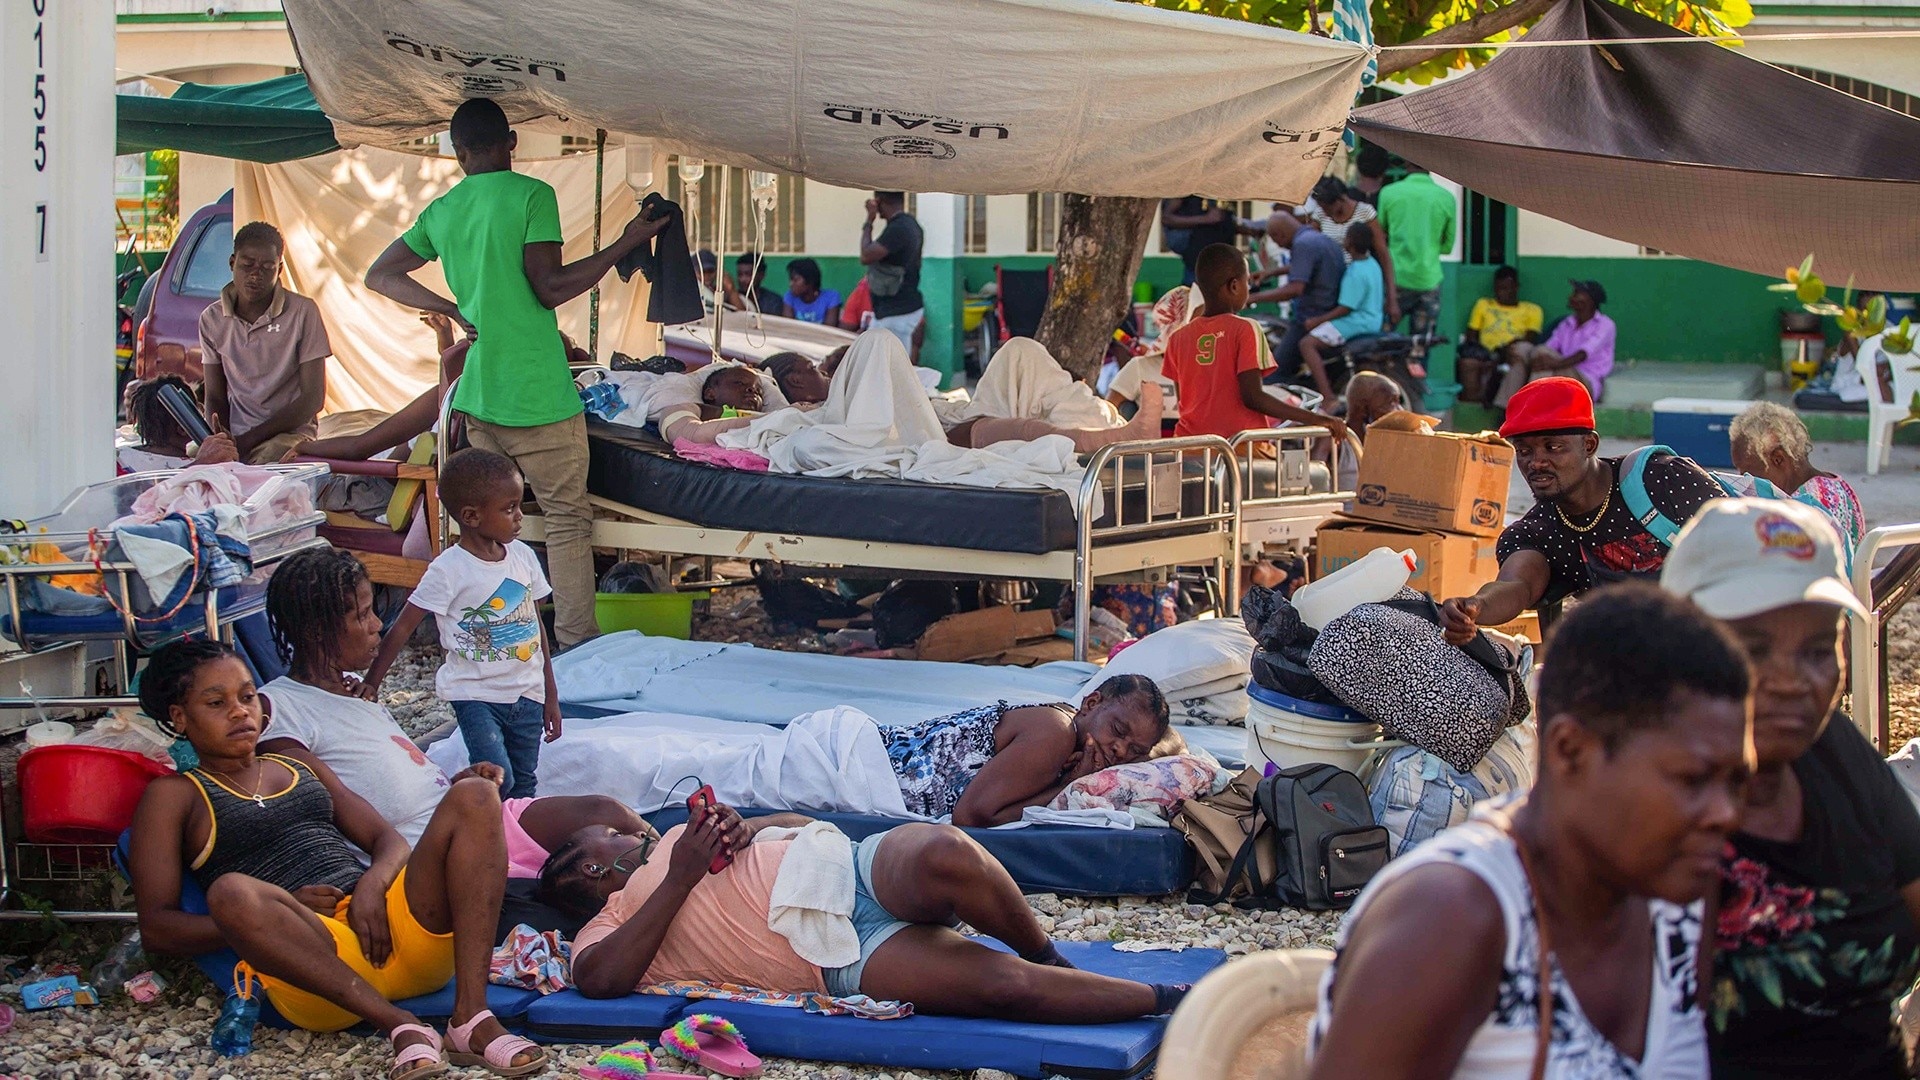 Watch hoy Día Highlight Haití lucha para atender a los más de 5,000